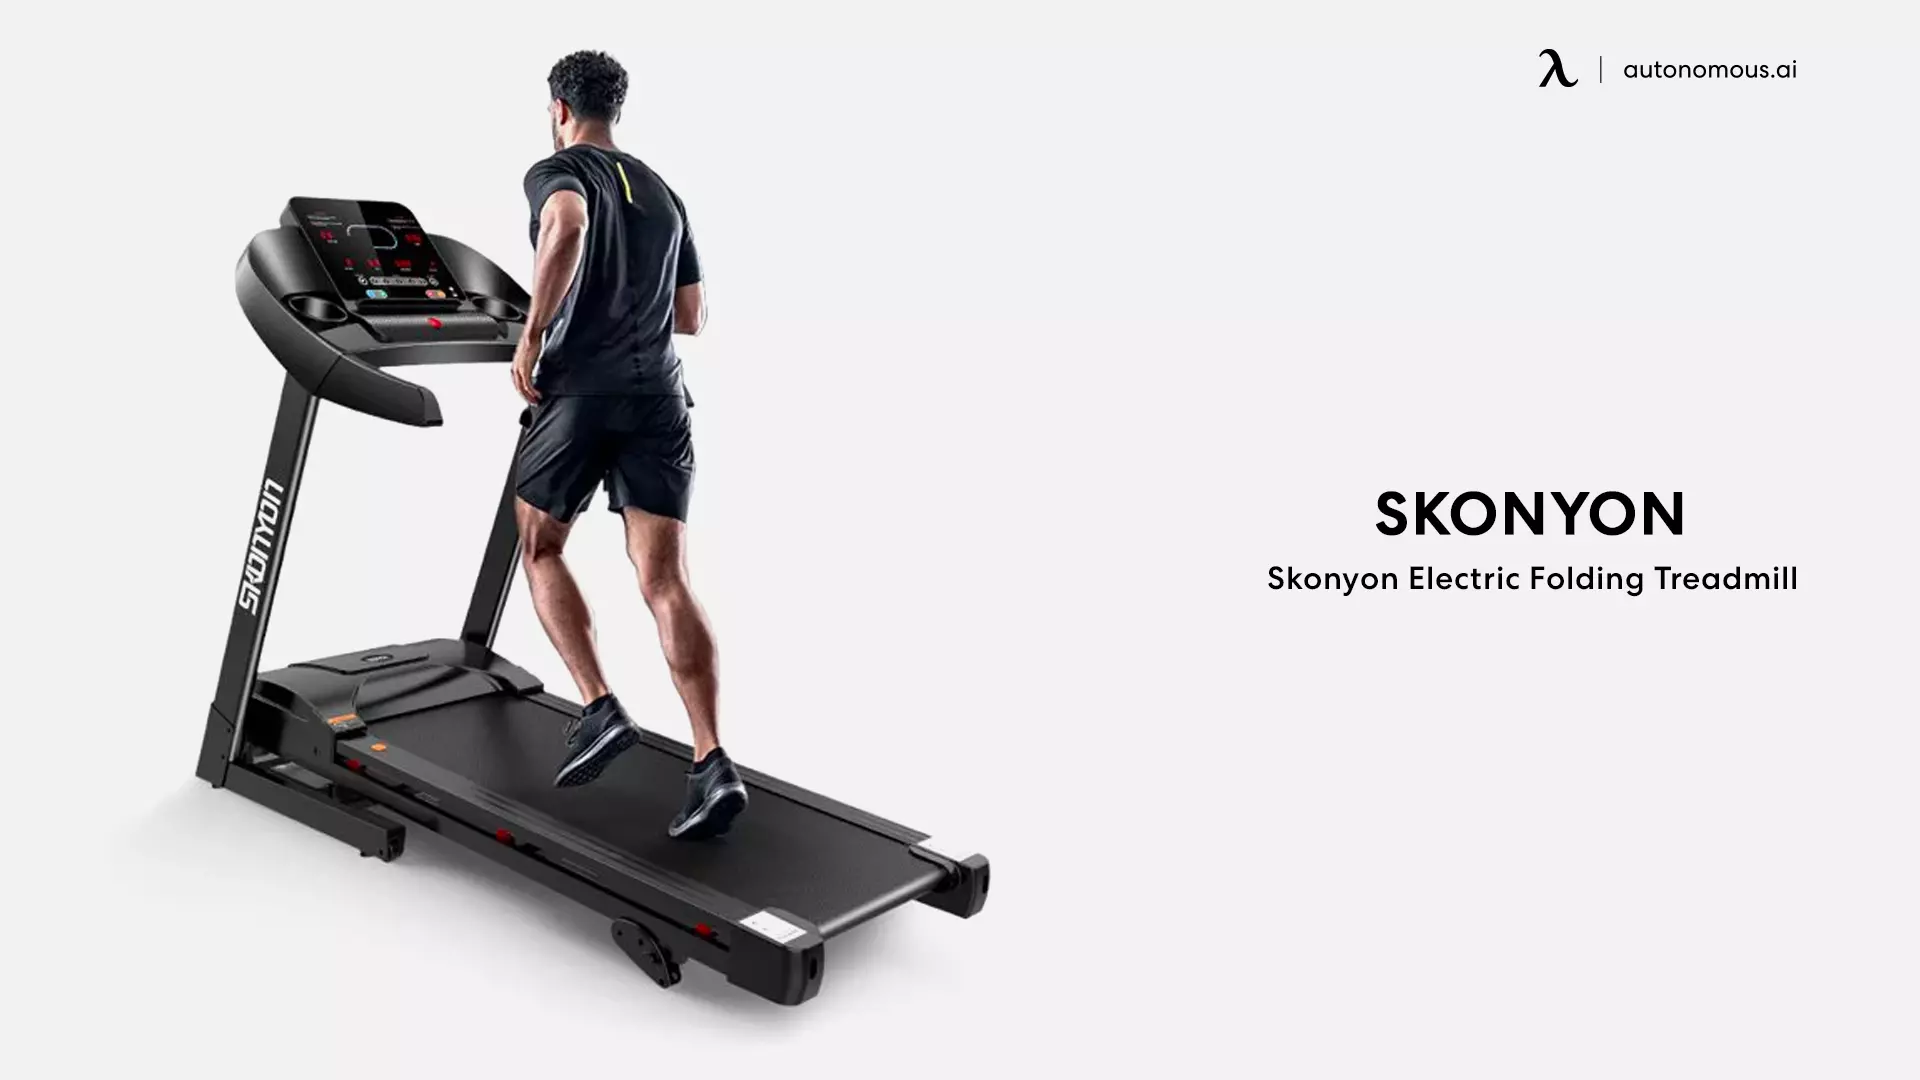 Skonyon Electric Folding Treadmill